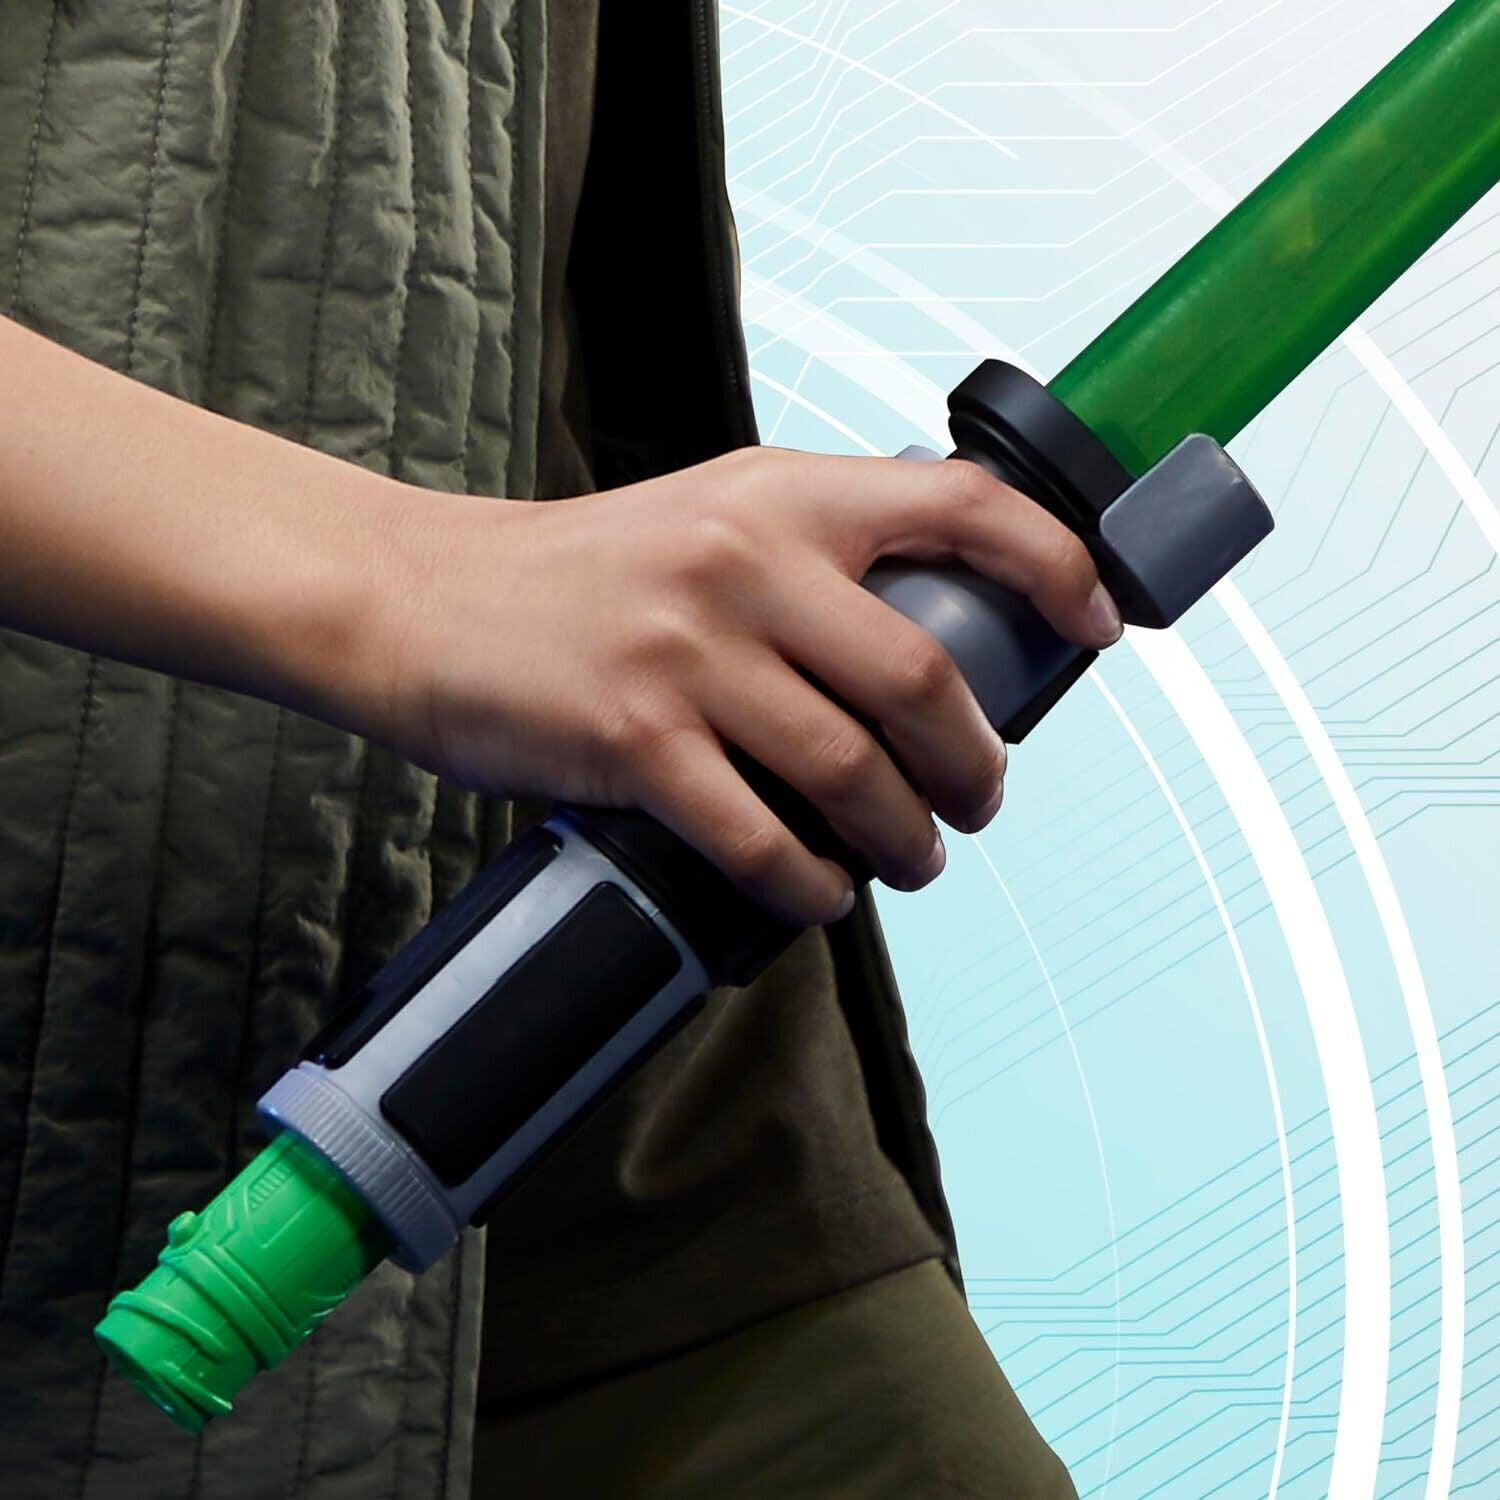 Star Wars Lightsaber Forge Yoda, Green Customizable Electronic Lightsaber, Star